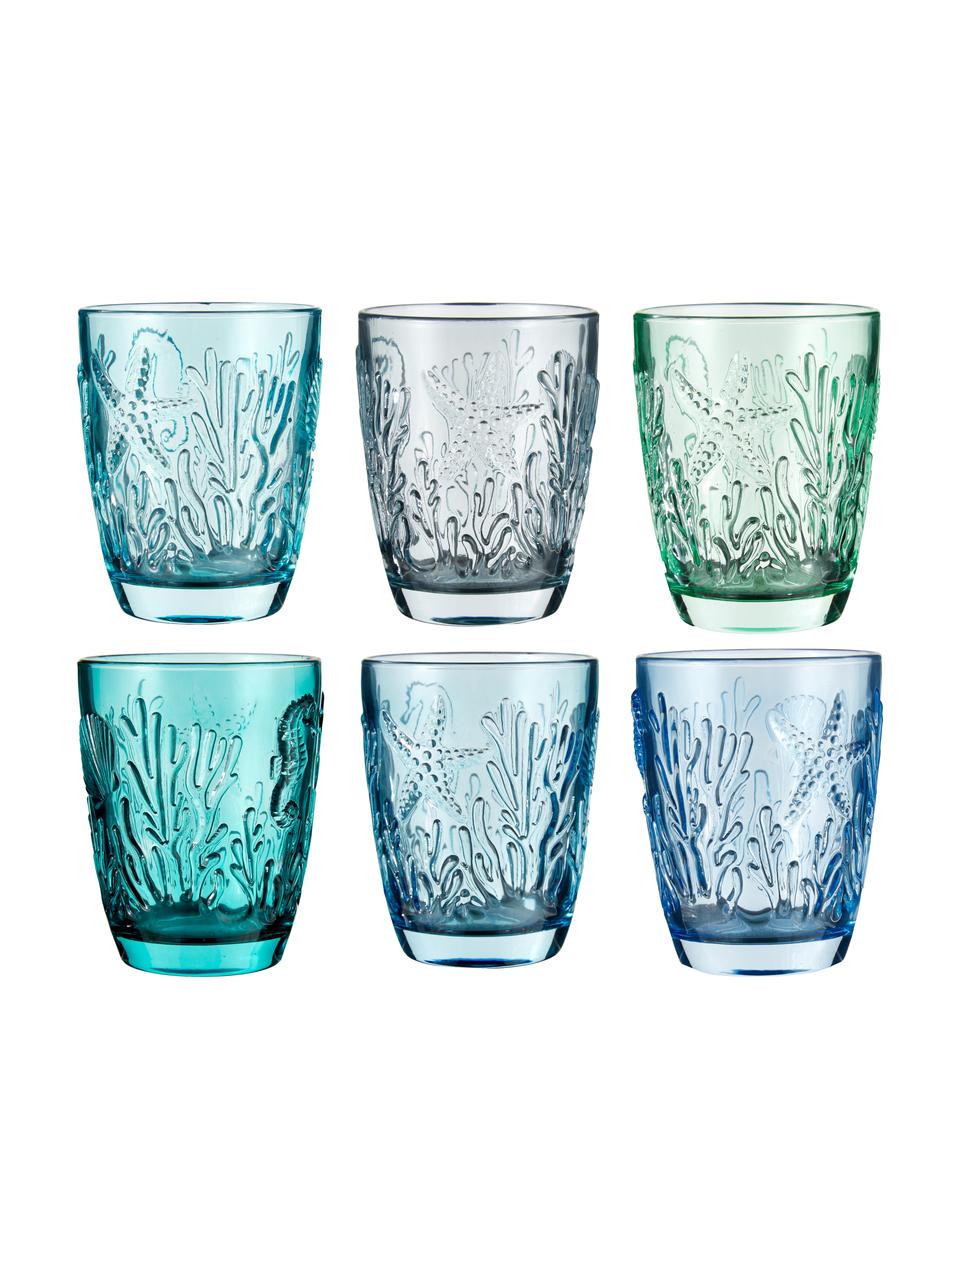 Set 6 bicchieri acqua con rilievo Pantelleria, Vetro, Tonalità blu, Ø 8 x 10 cm